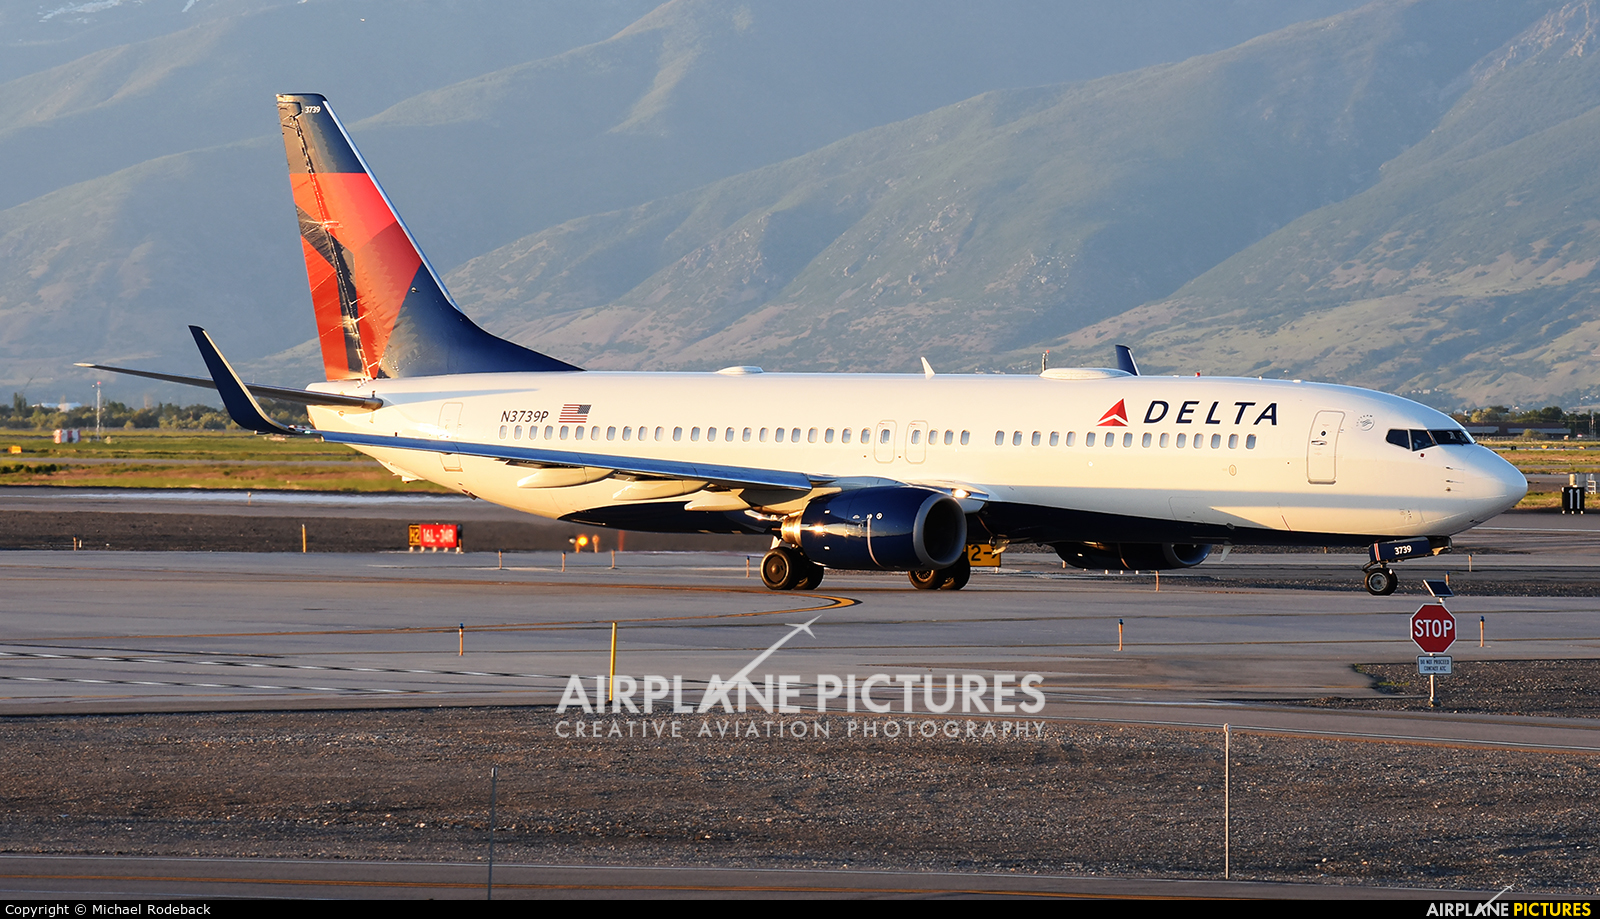 N3739p Delta Air Lines Boeing 737 800 At Salt Lake City